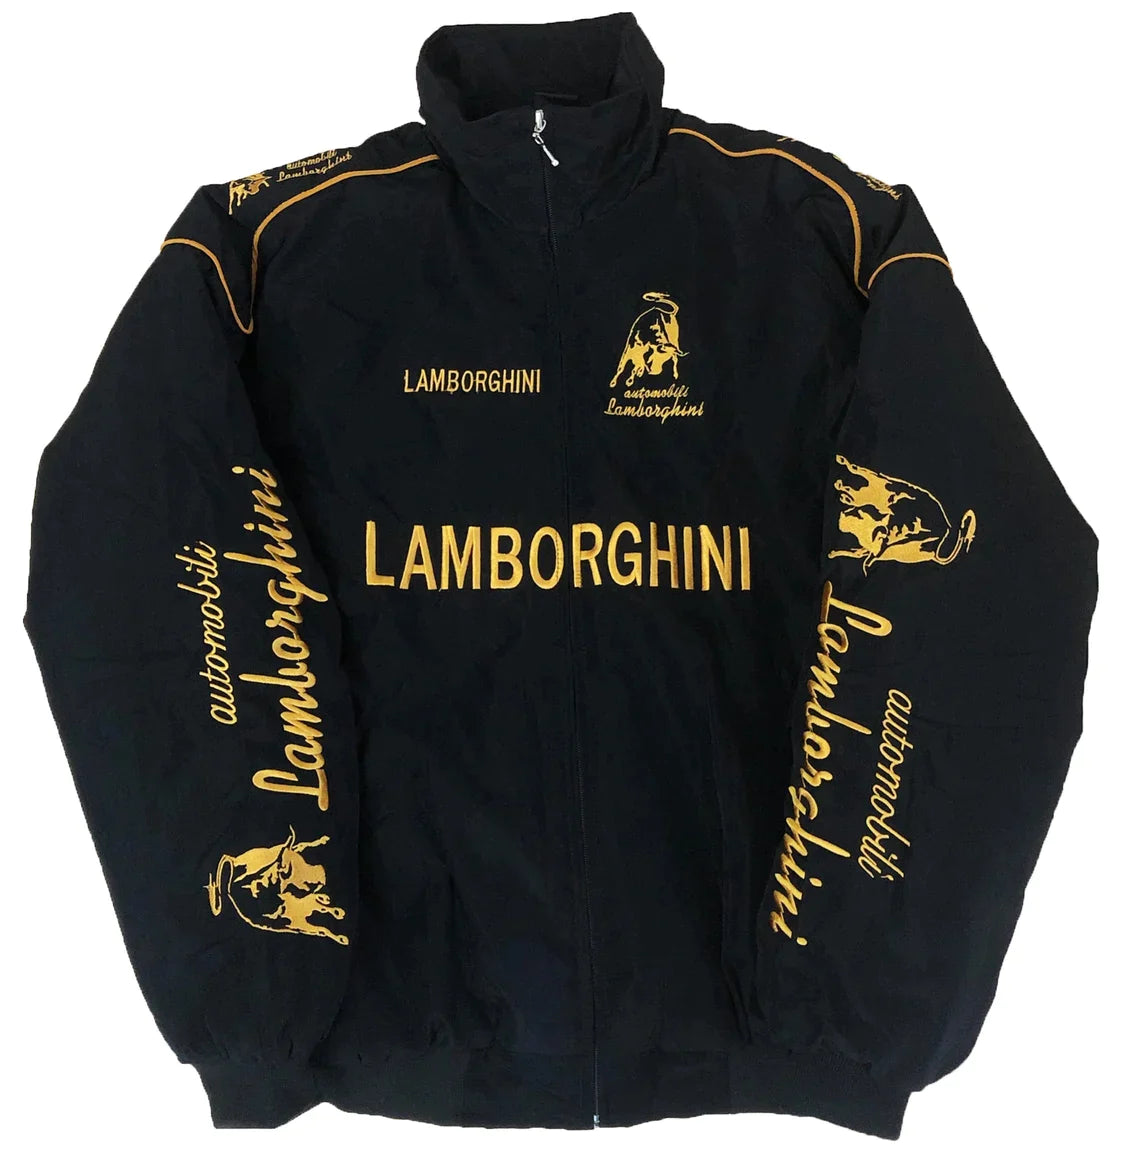 Vintage Racing Lambo Jacket